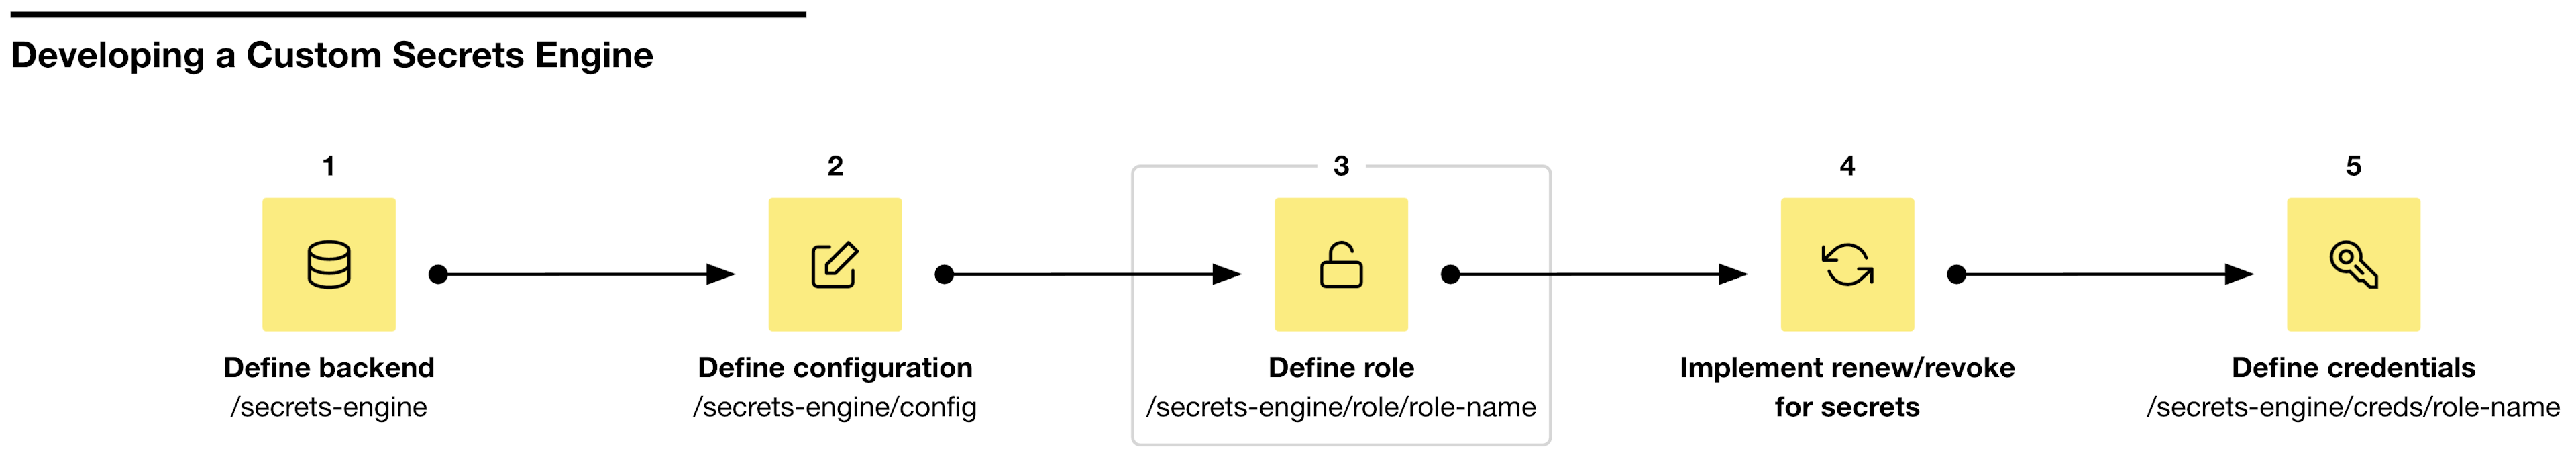 Step 3 creates secrets engine role at /secrets-engine/role